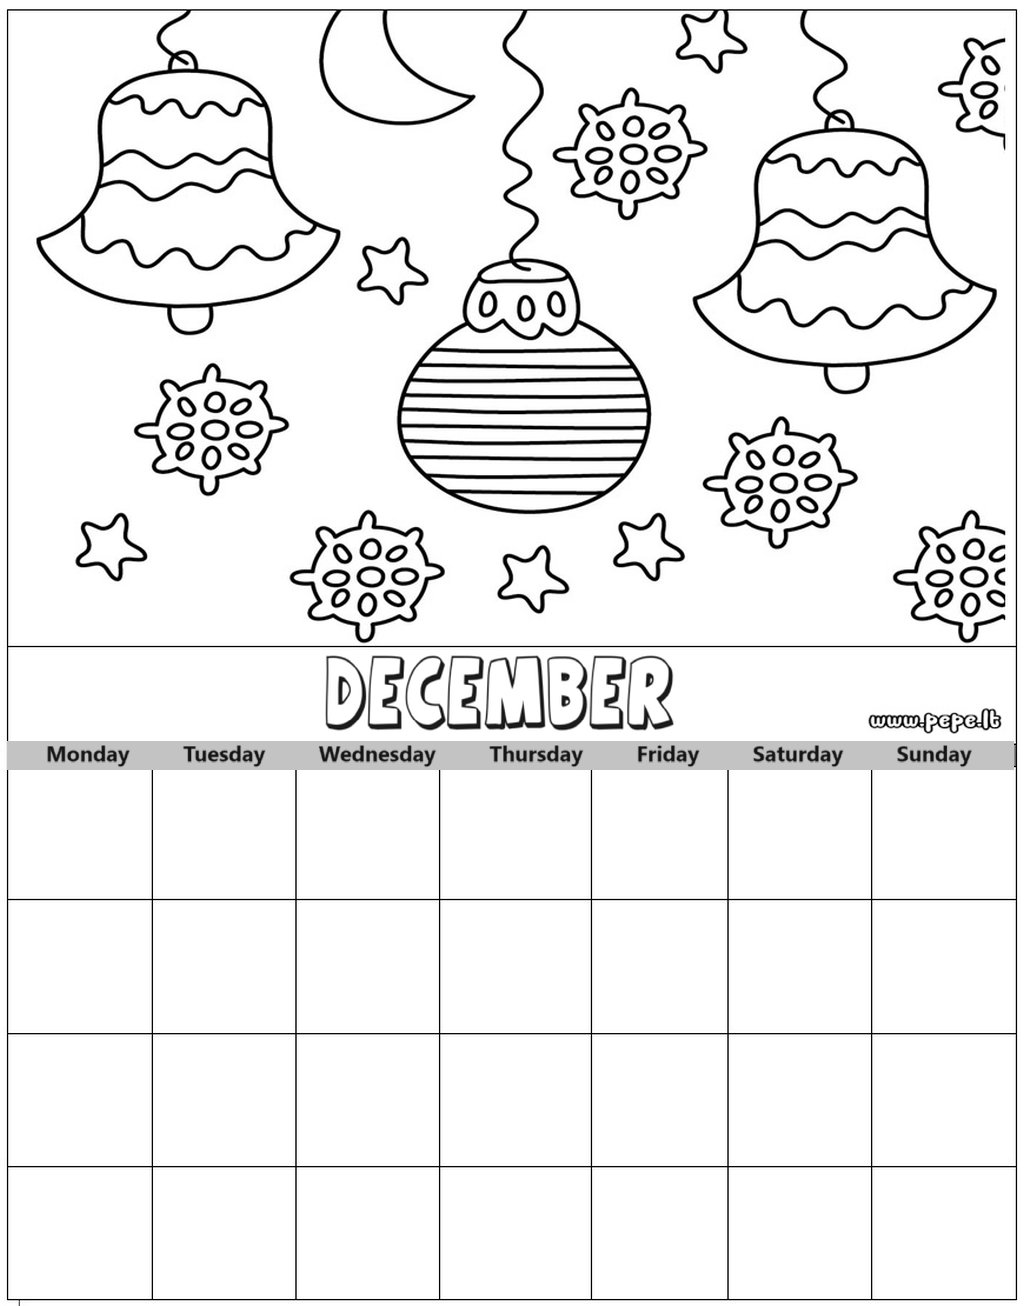 December calendar for coloring